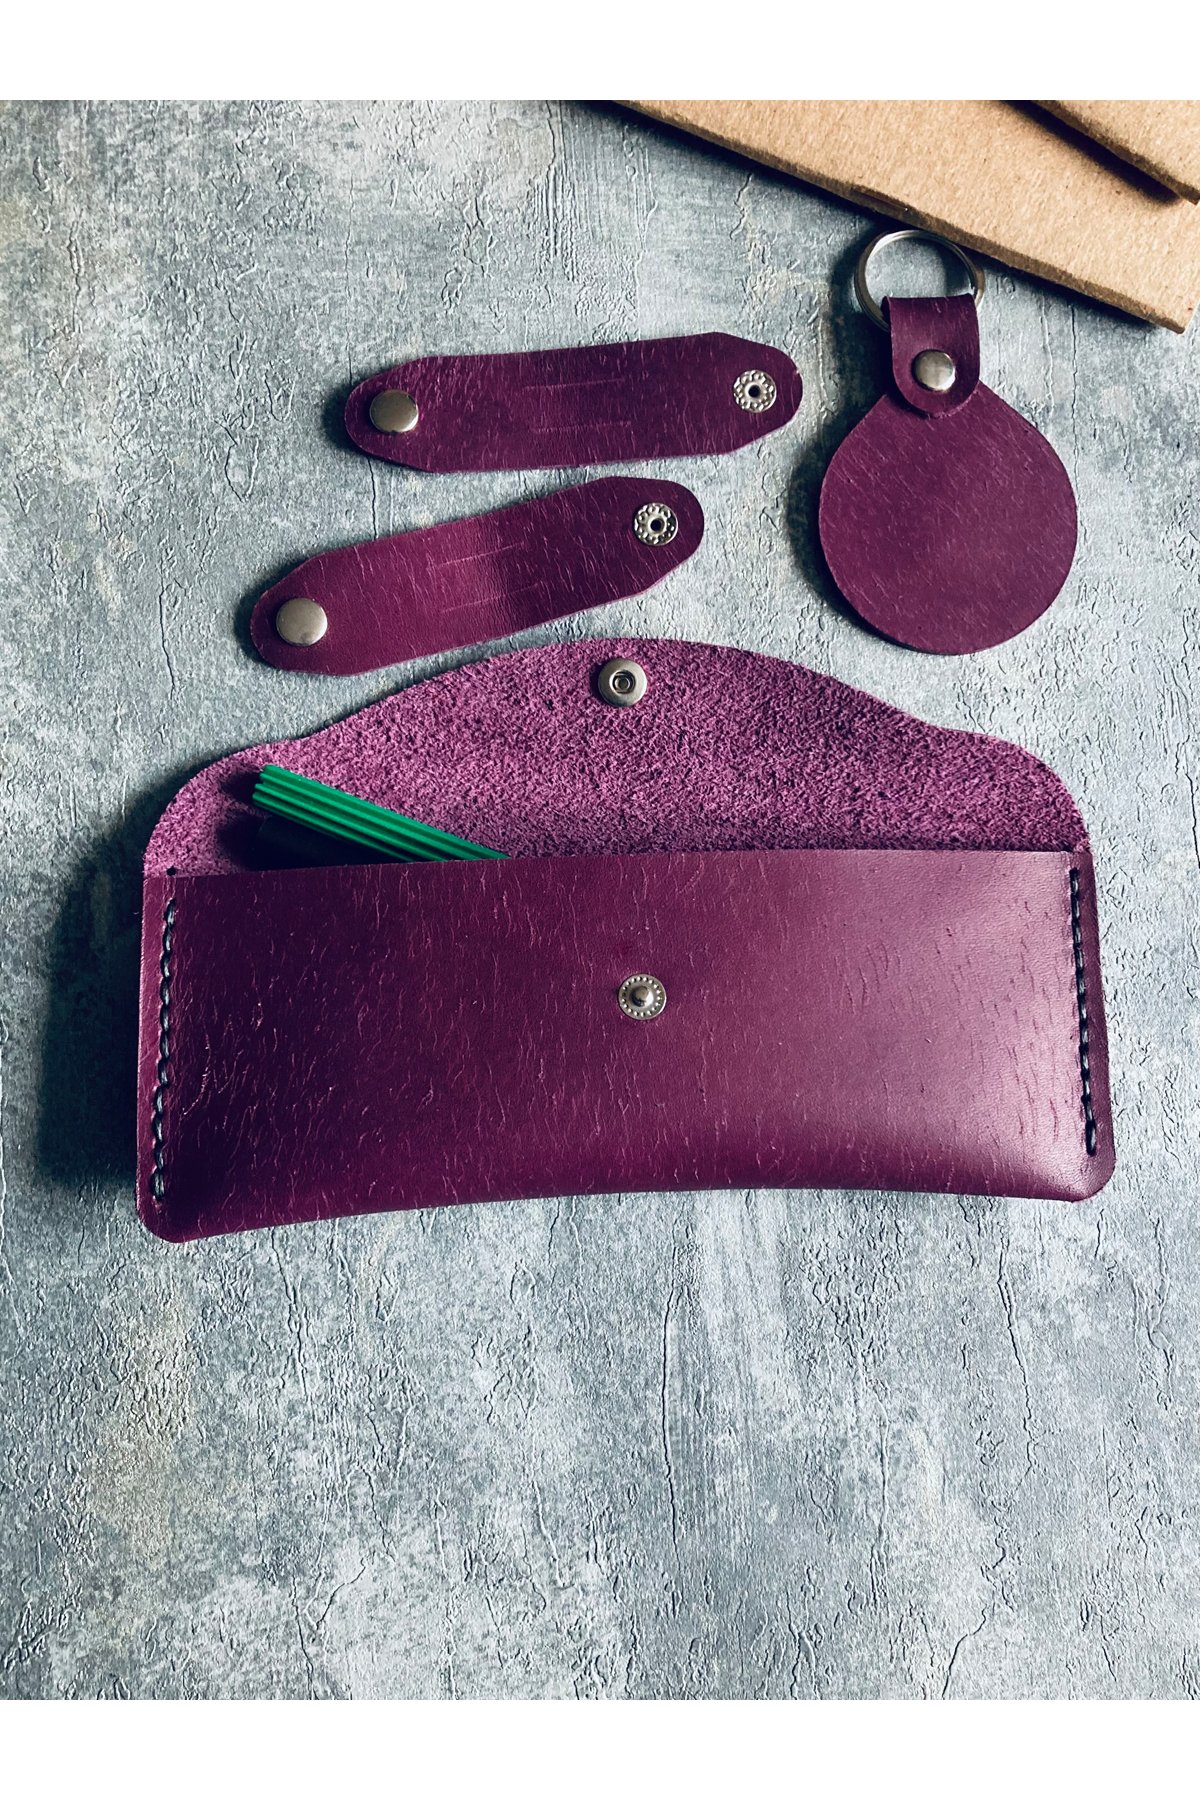 Set of 4 Pen Holder - Purple Leather | Bretya Leather